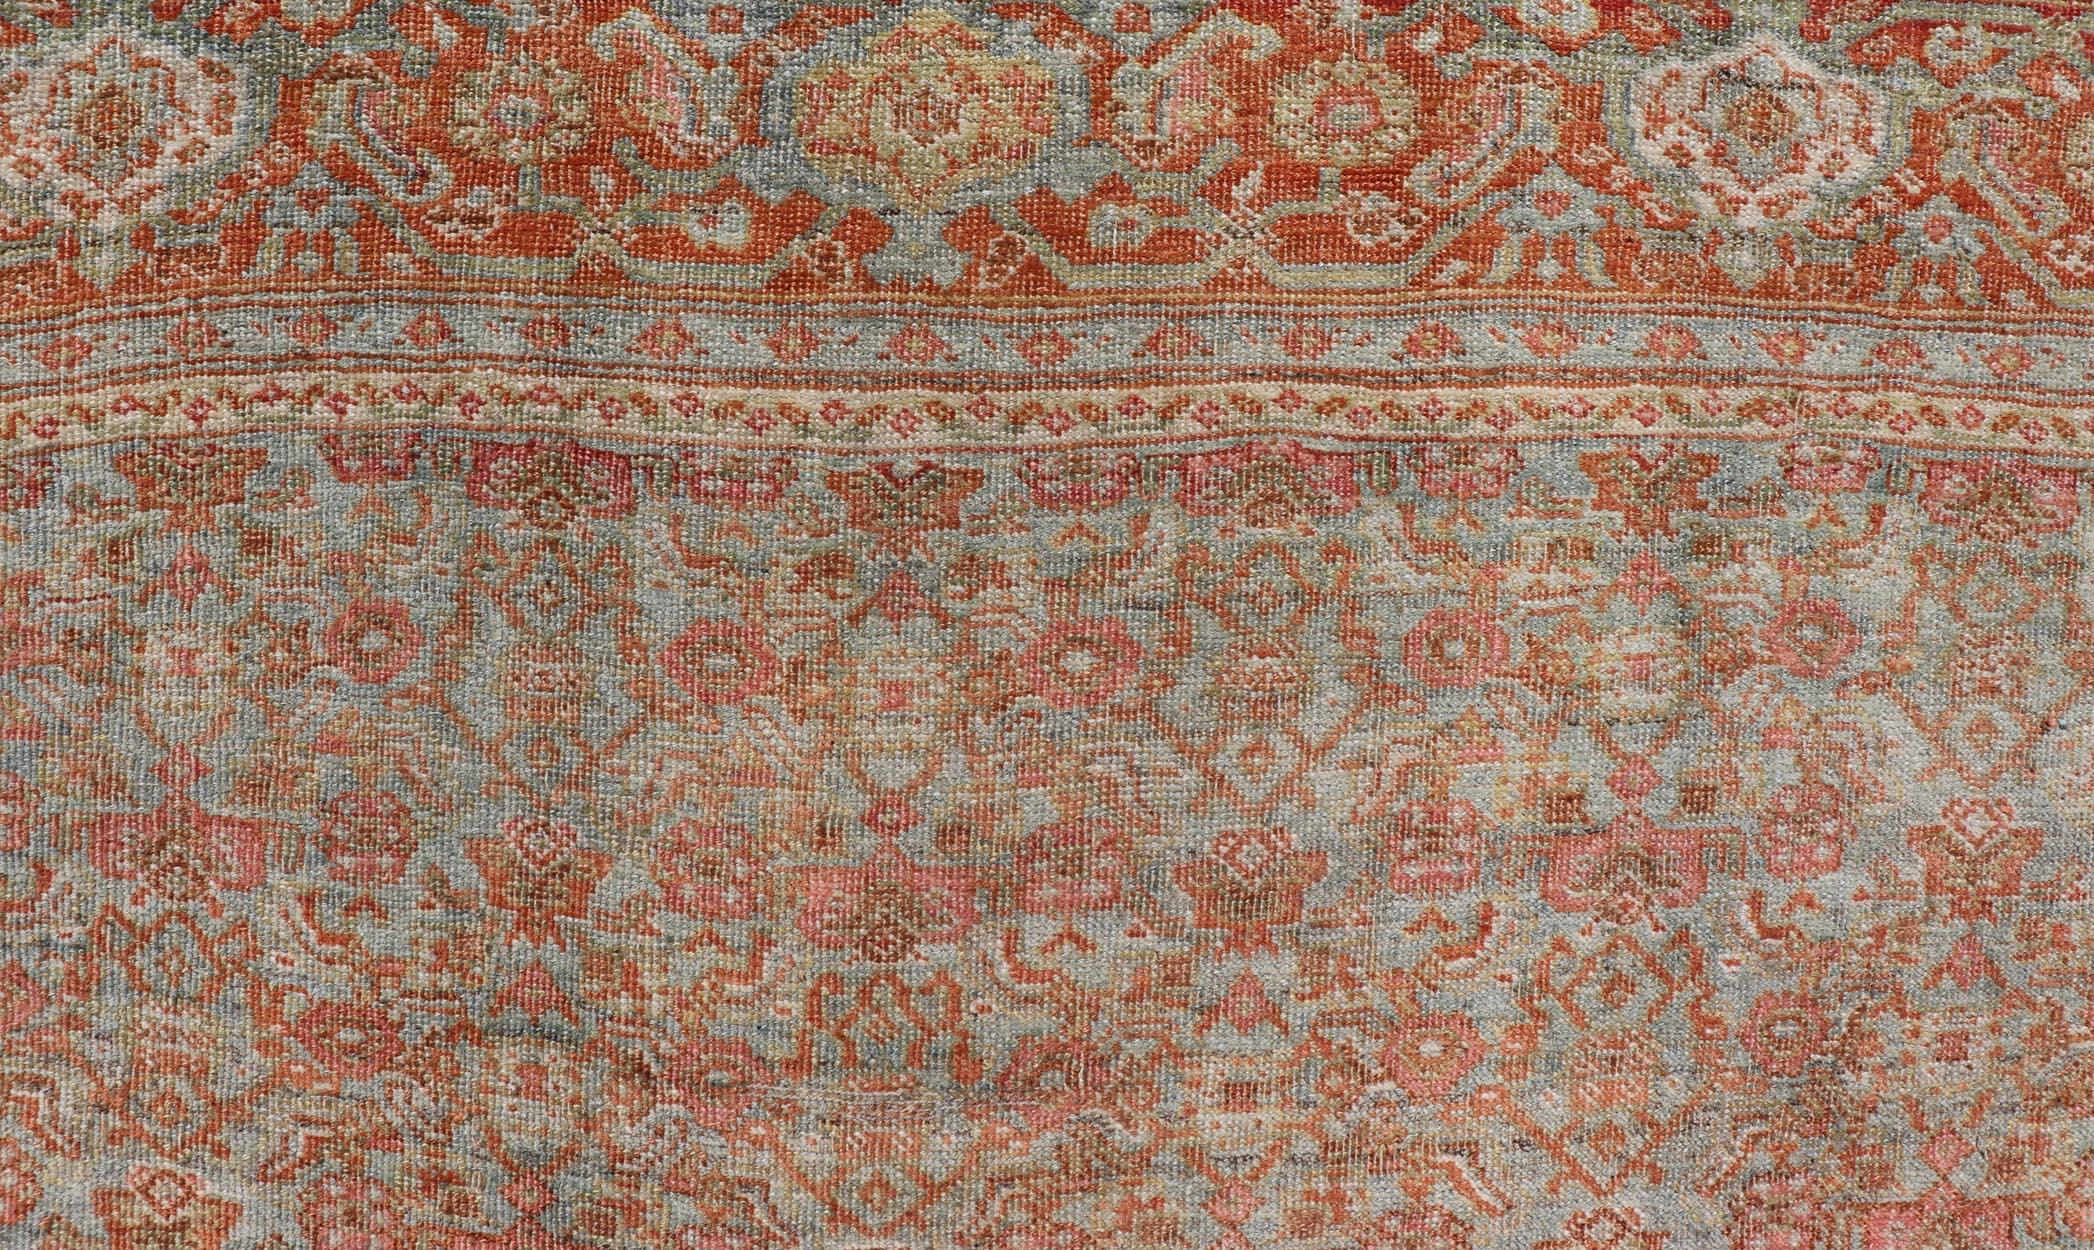 Antique Persian Bidjar Rug In Herati Design With Medallion In Soft Muted Colors. Keivan Woven Arts / rug EMB-222211-A-15467, country of origin / type: Iran / Bidjar, circa 1910
Measures: 7'2 x 12'0 
This magnificent Bidjar with an exquisite,